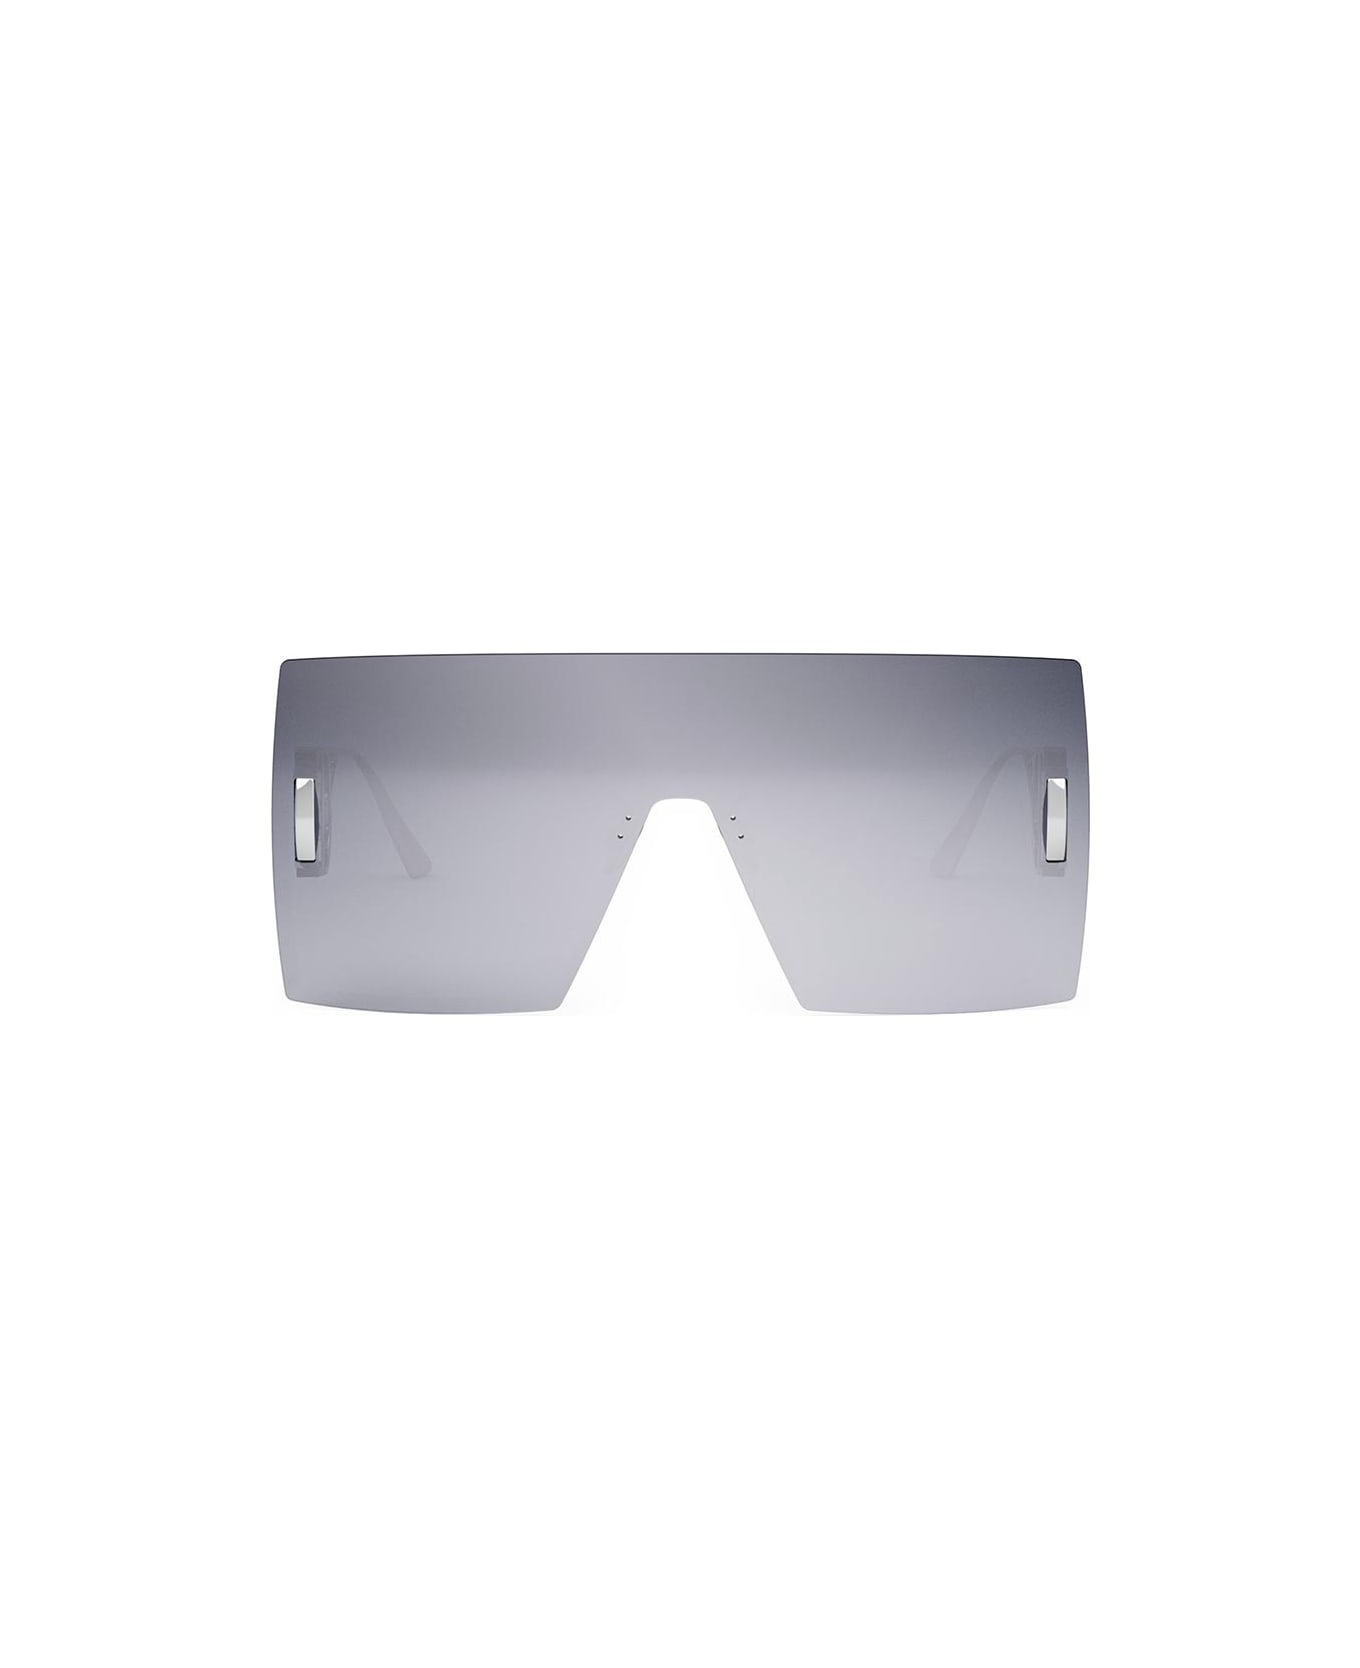 Dior Eyewear Sunglasses - Argento/Grigio specchiato サングラス